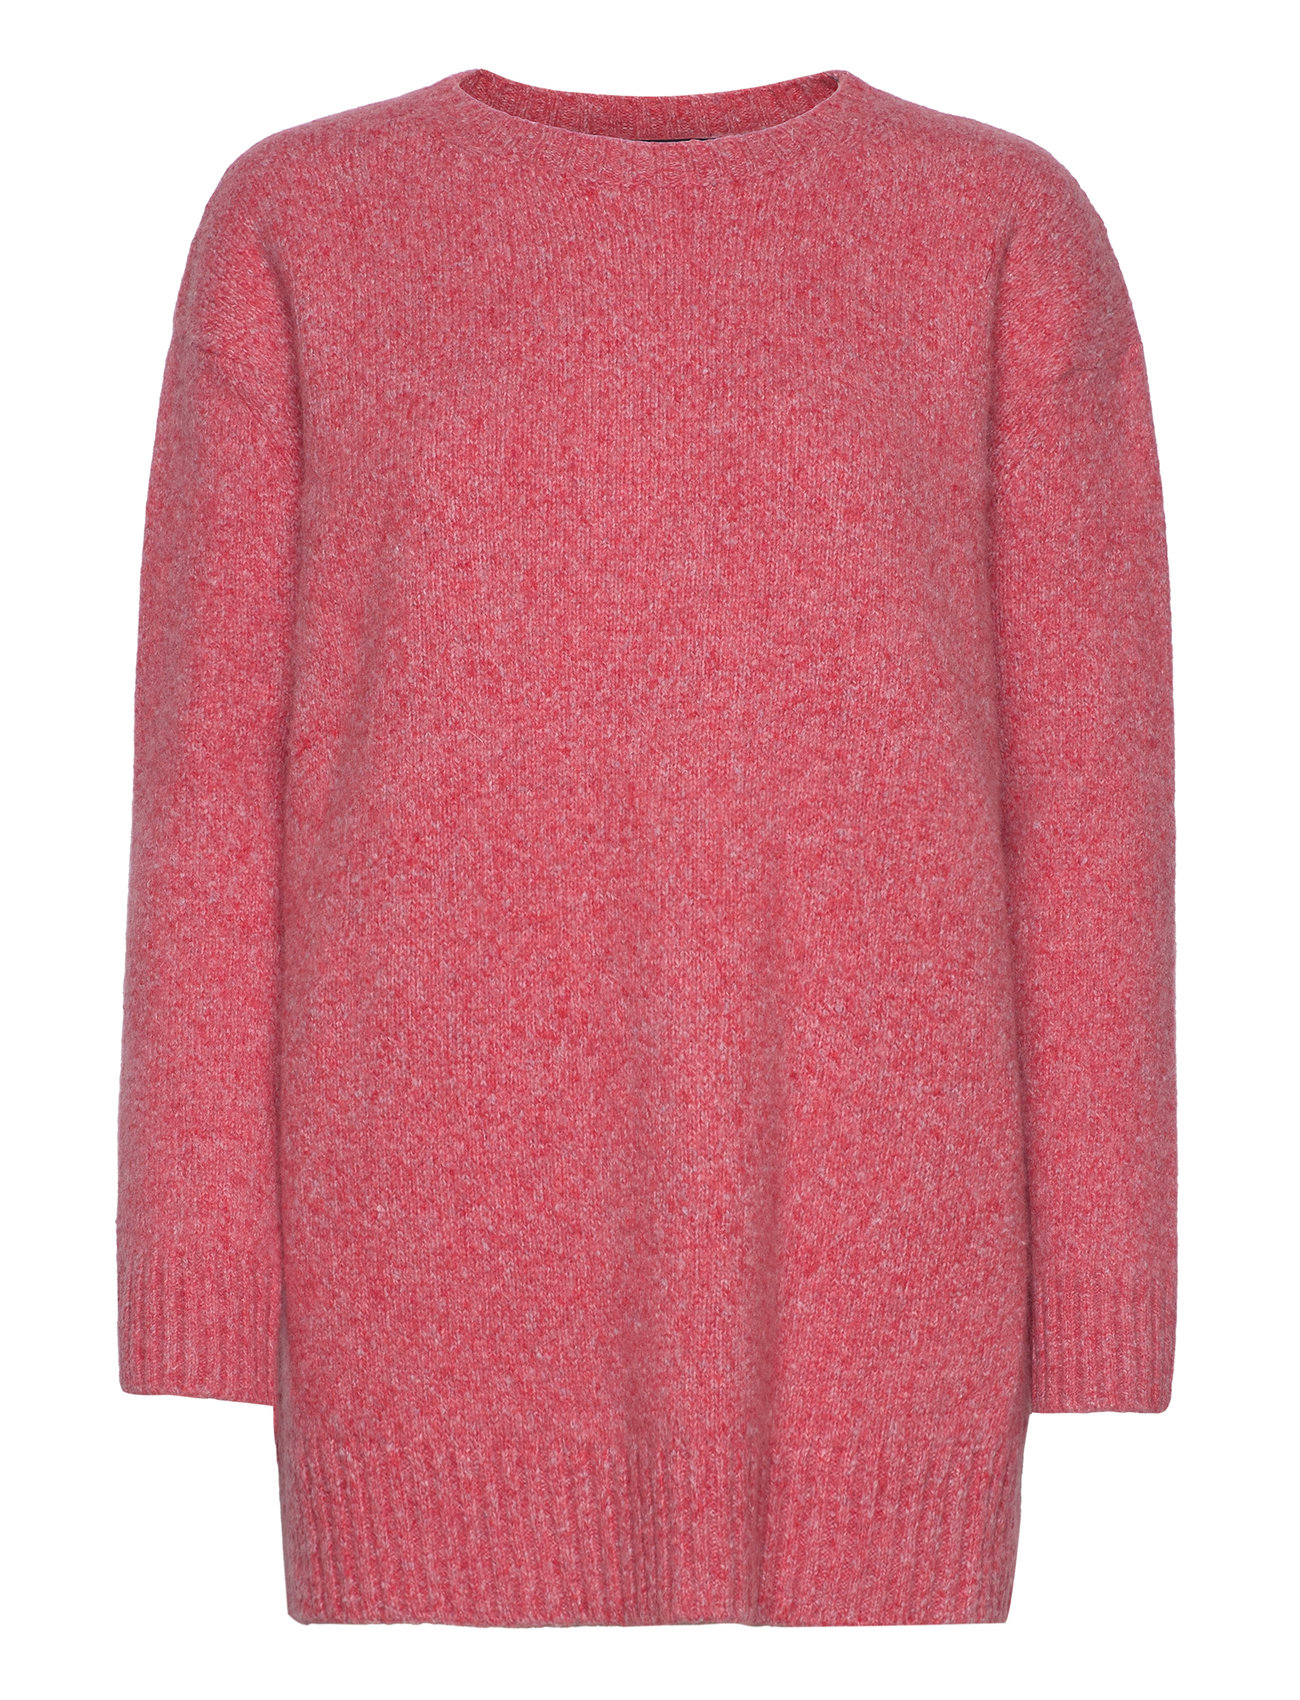 Oglio Tops Knitwear Jumpers Pink Weekend Max Mara